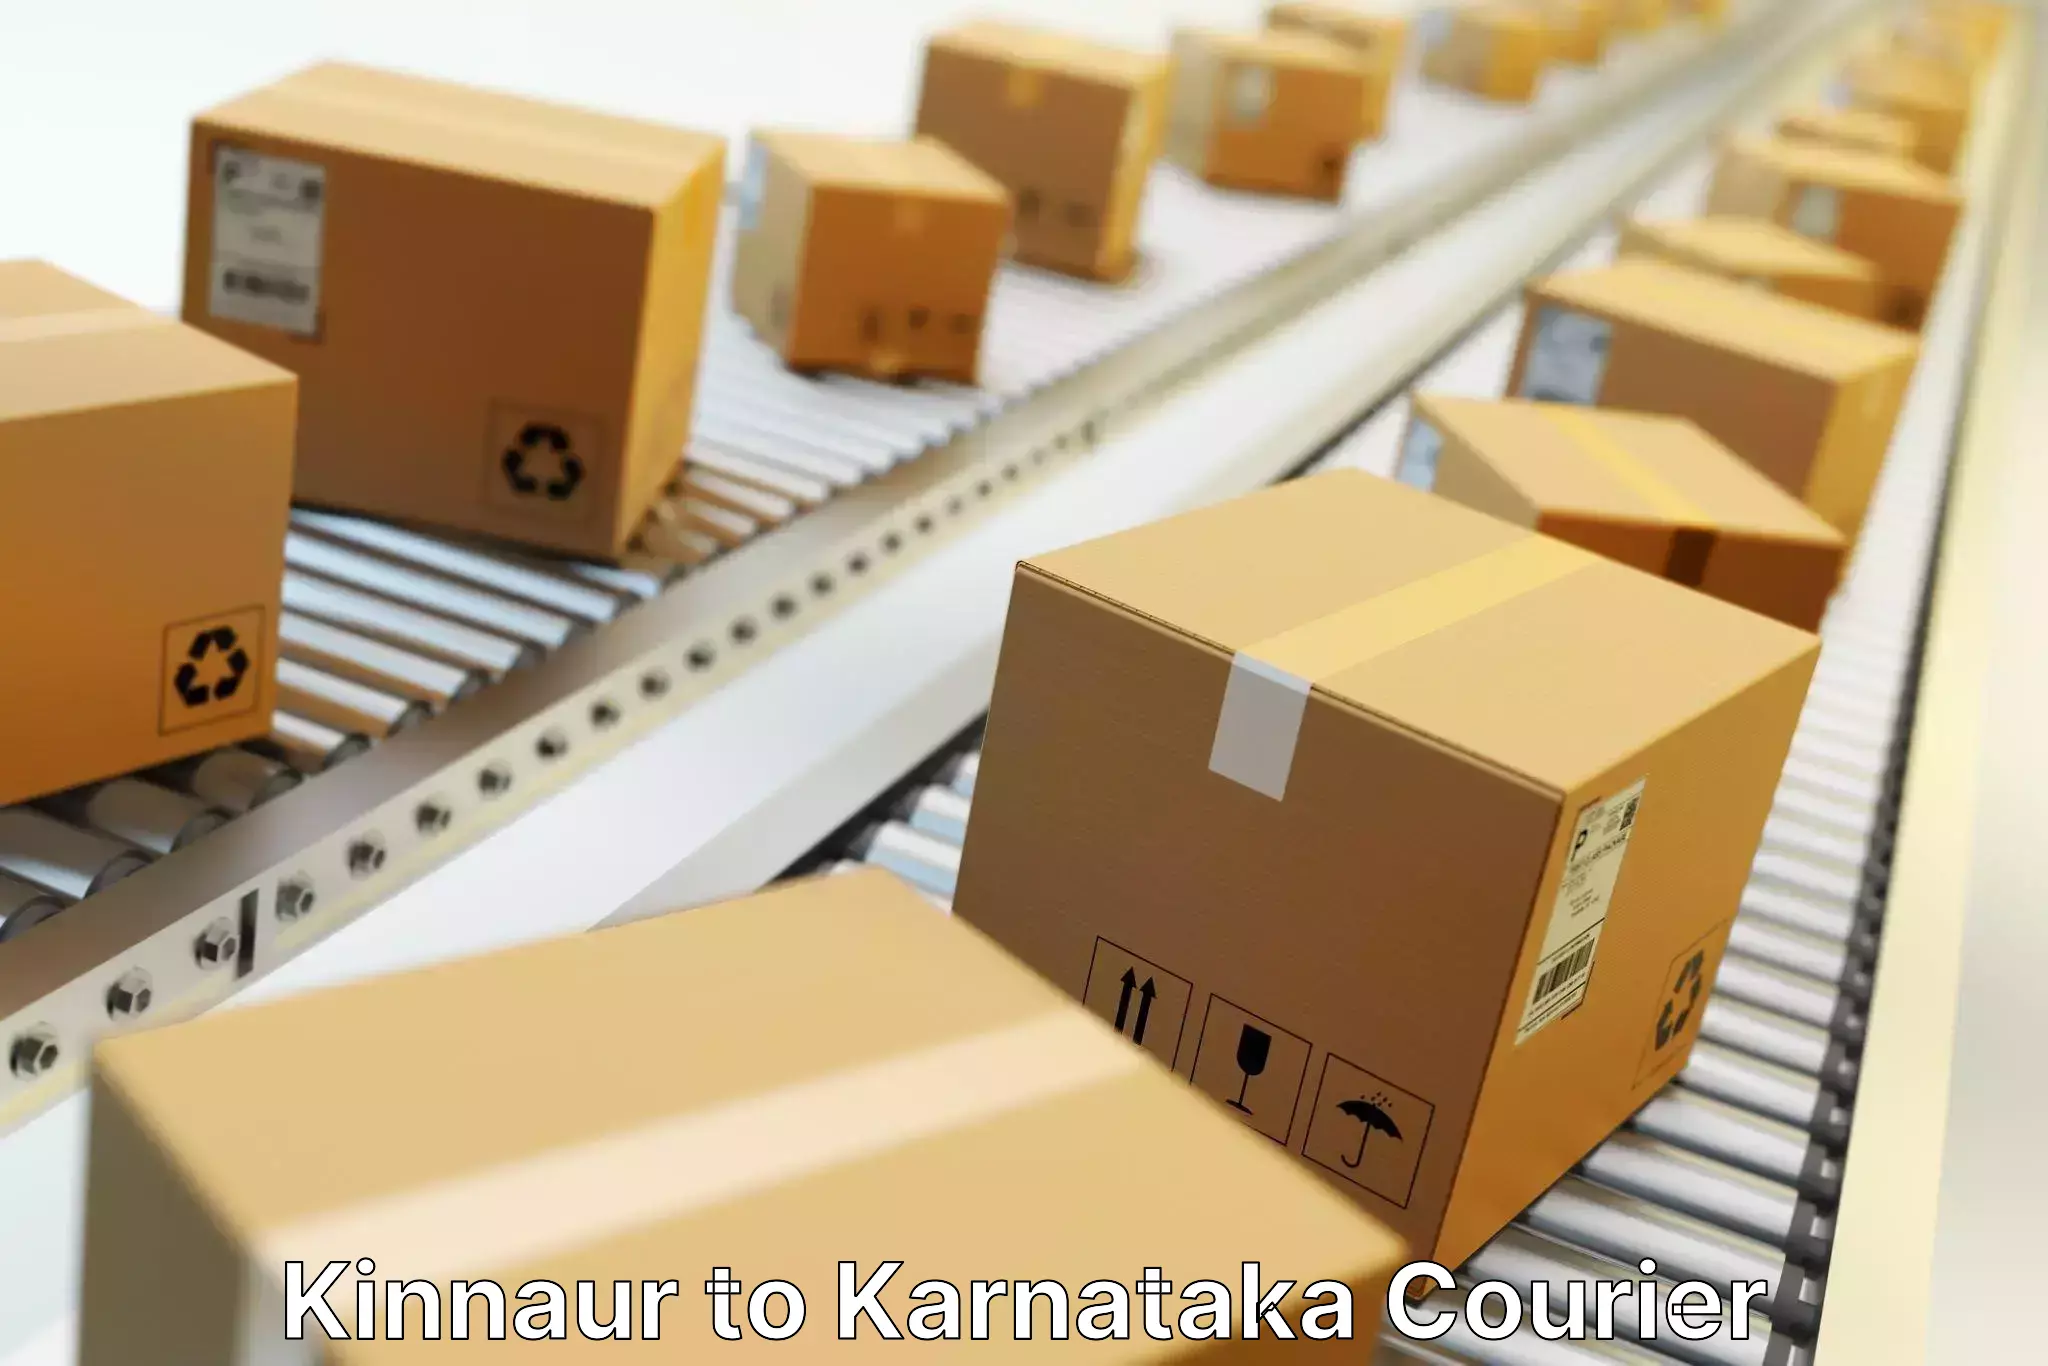 Courier membership Kinnaur to Channapatna